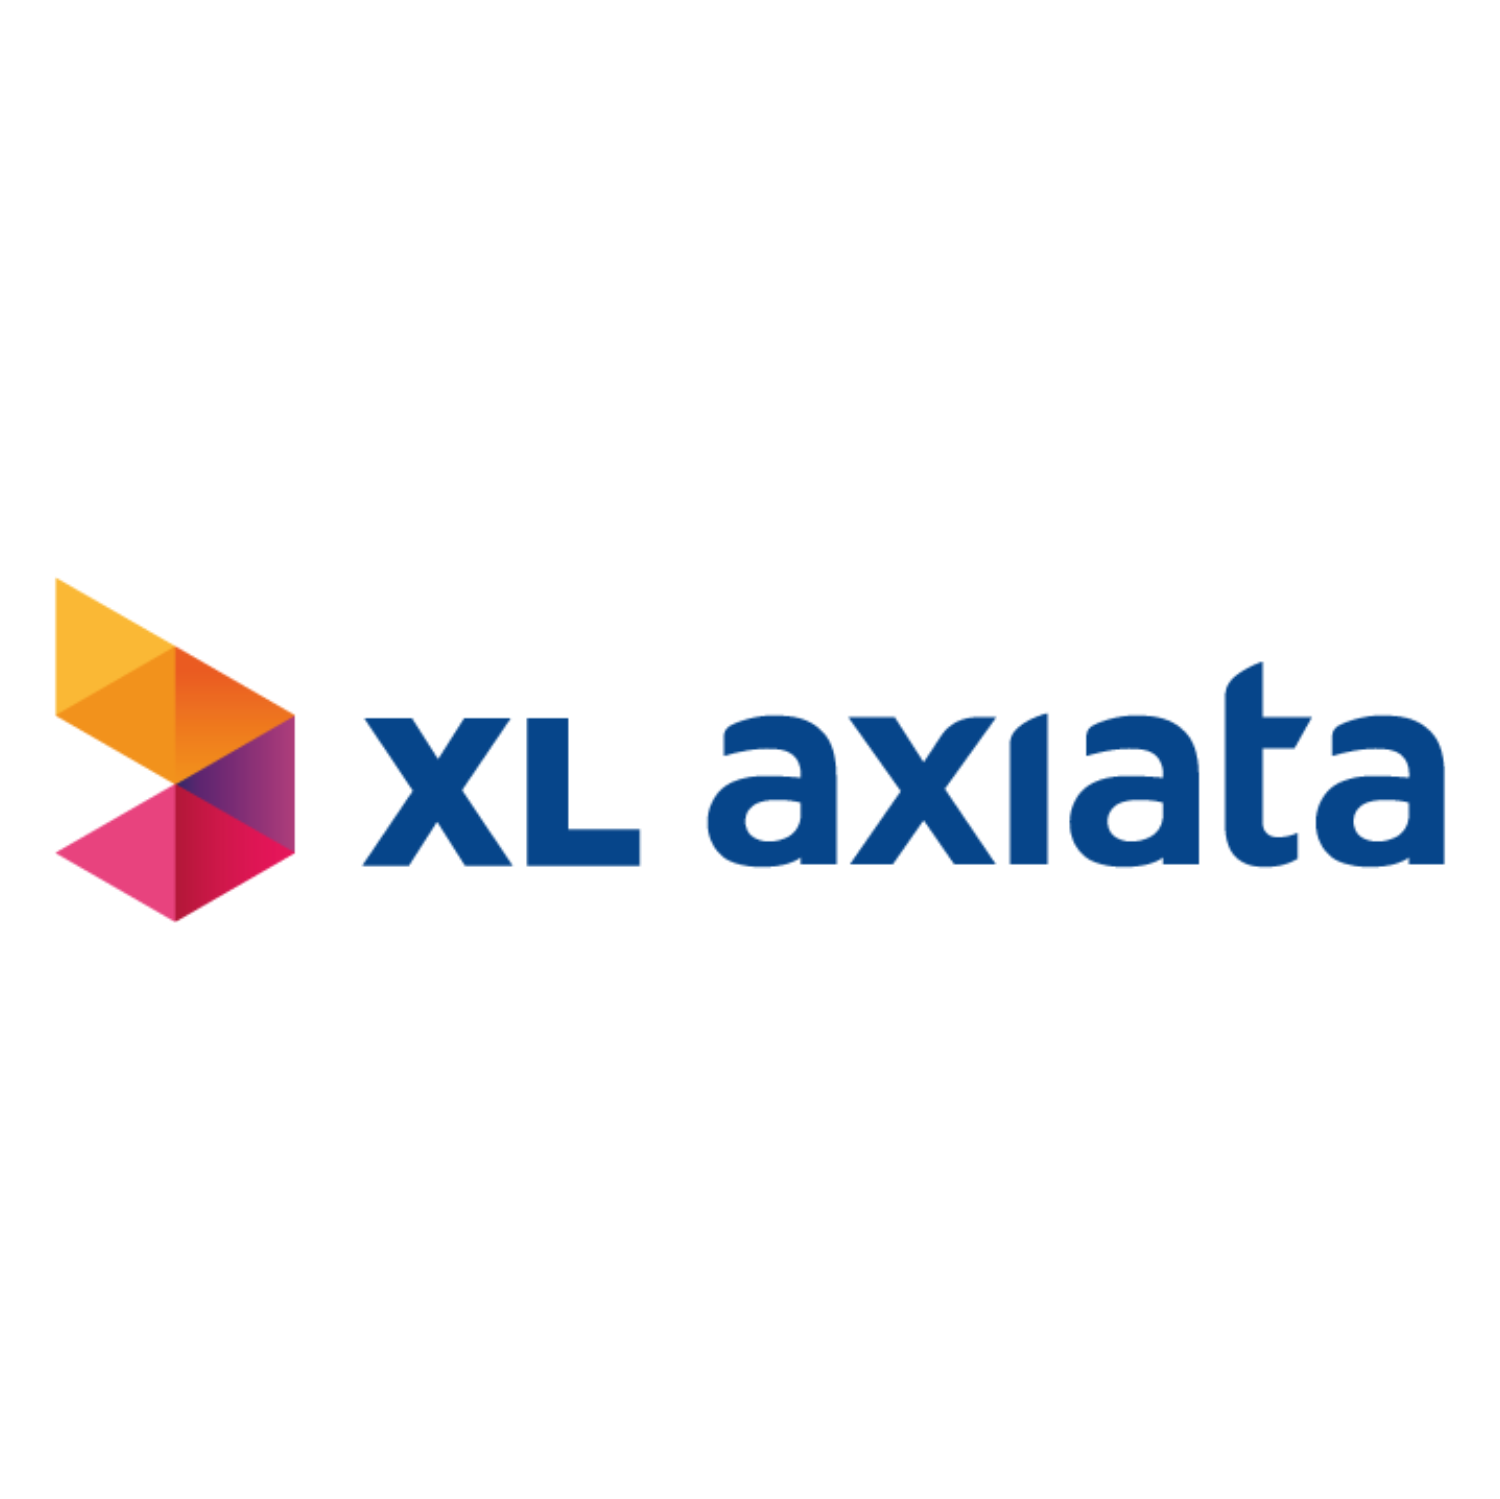 XL Axiata Official Store